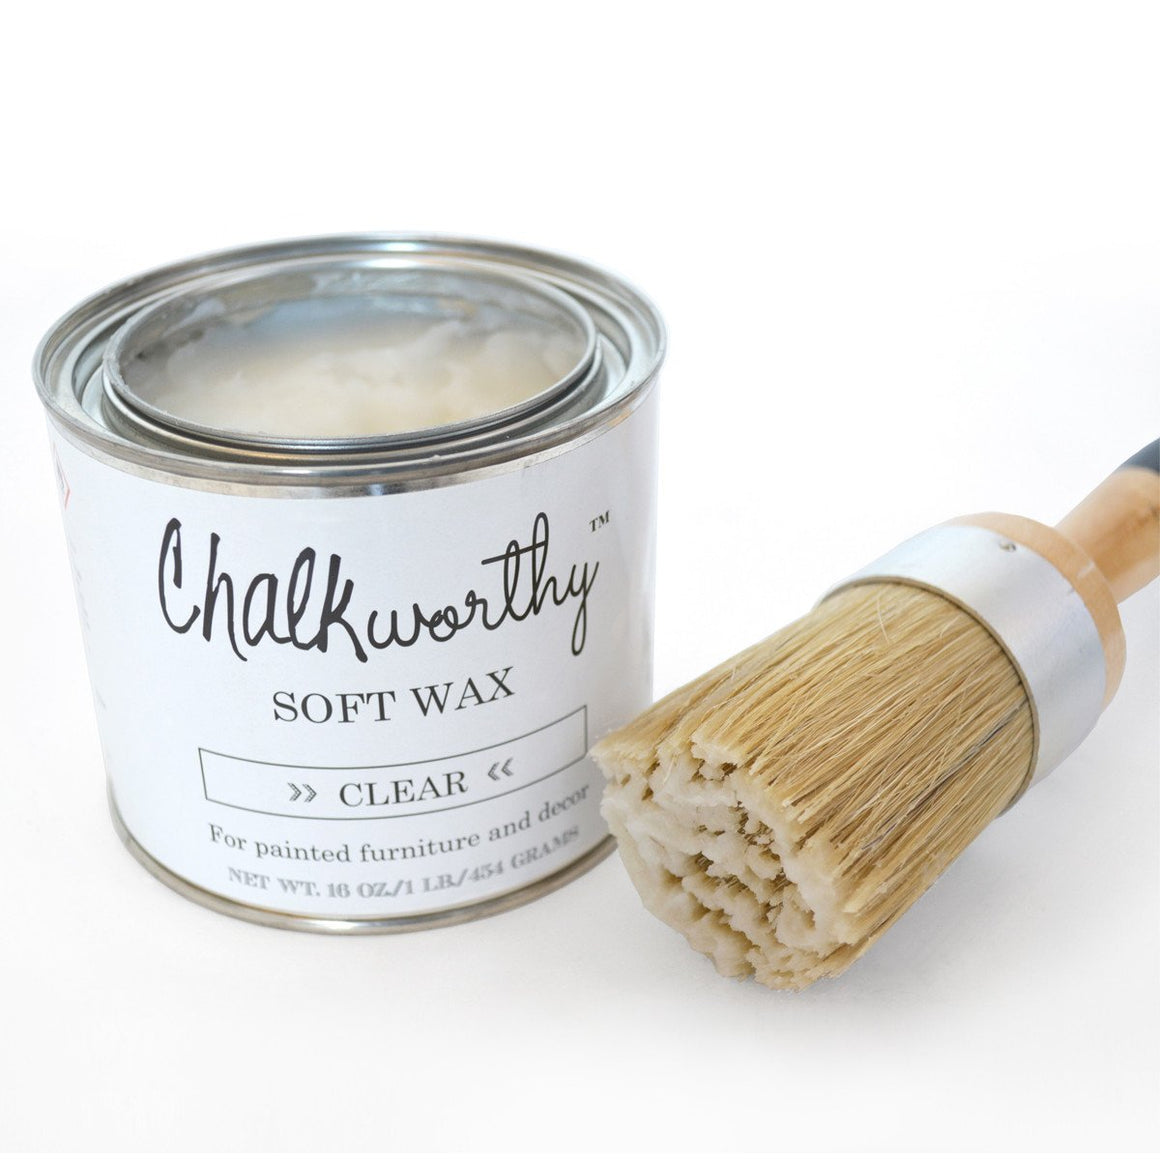 Chalkworthy Wax and Tool Antiquing Kit